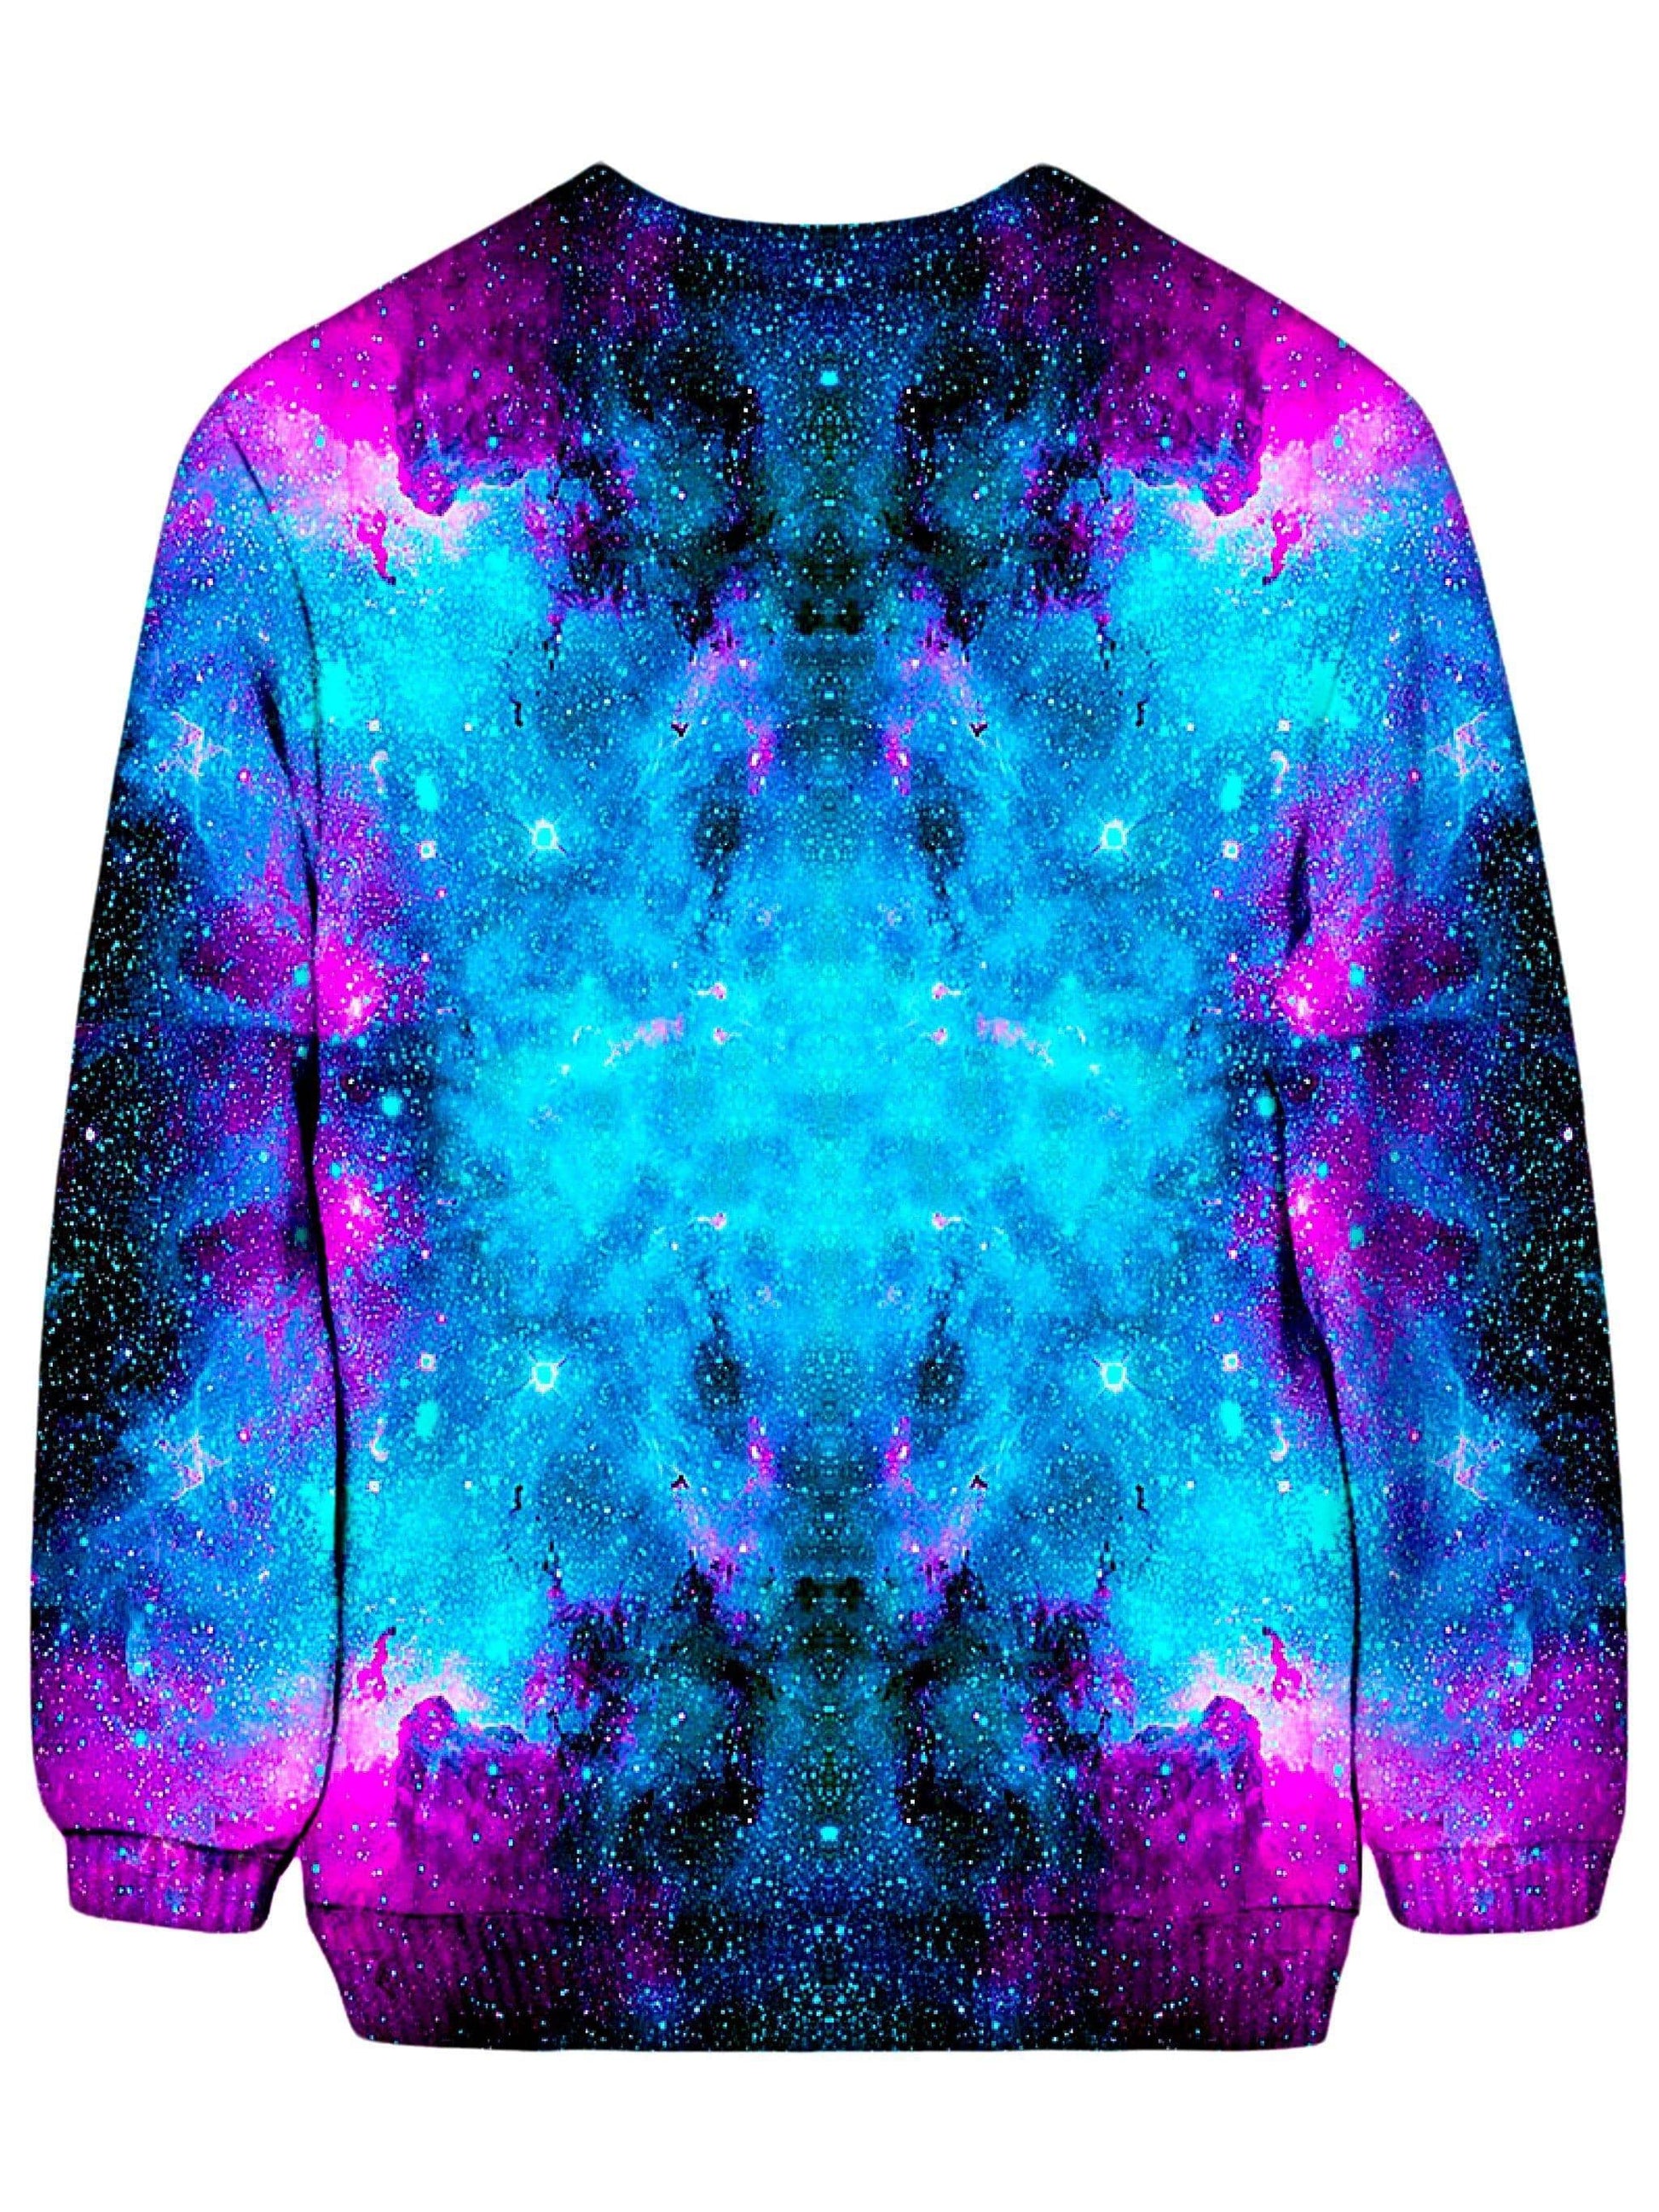 Galactic Spectrum Sweatshirt, iEDM, | iEDM